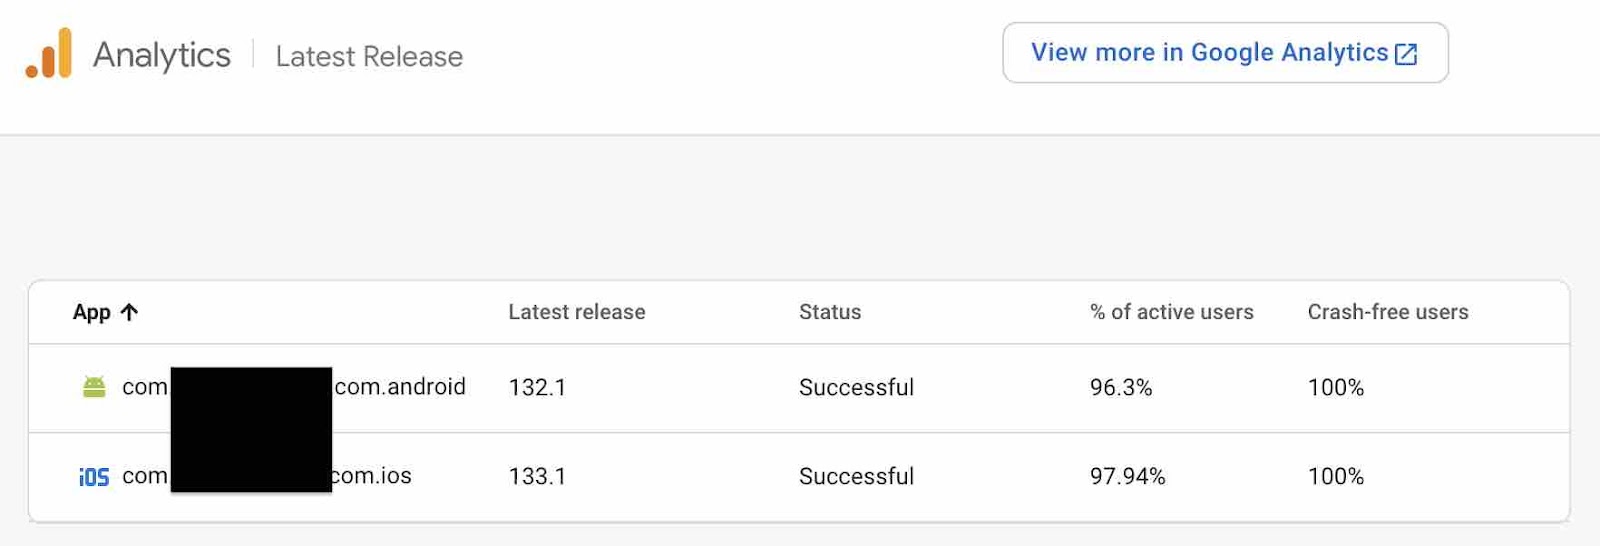 Google Firebase Analytics Latest Release Dashboard.